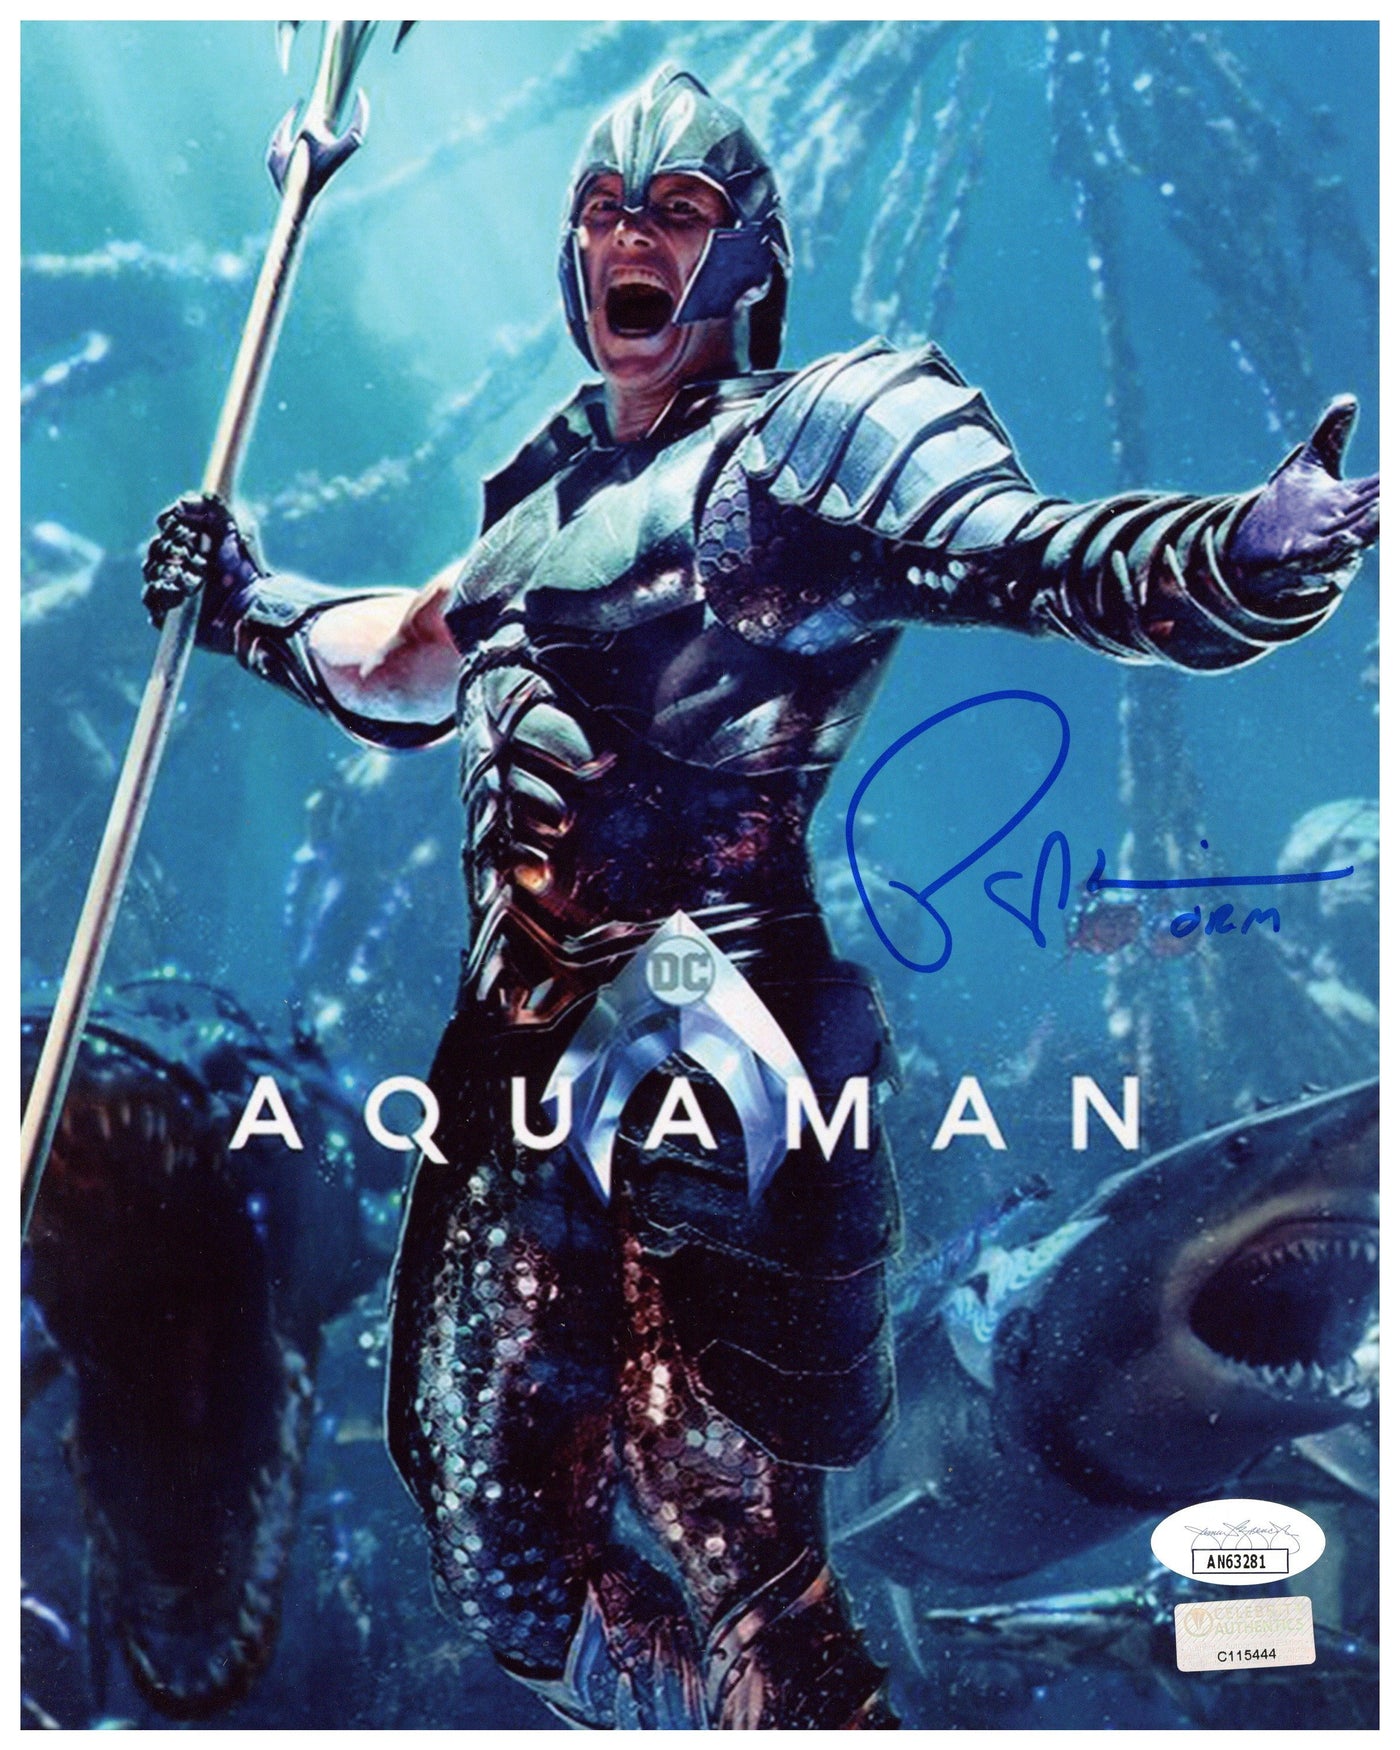 Patrick Wilson Signed 8x10 Photo Aquaman Authentic Autographed JSA COA